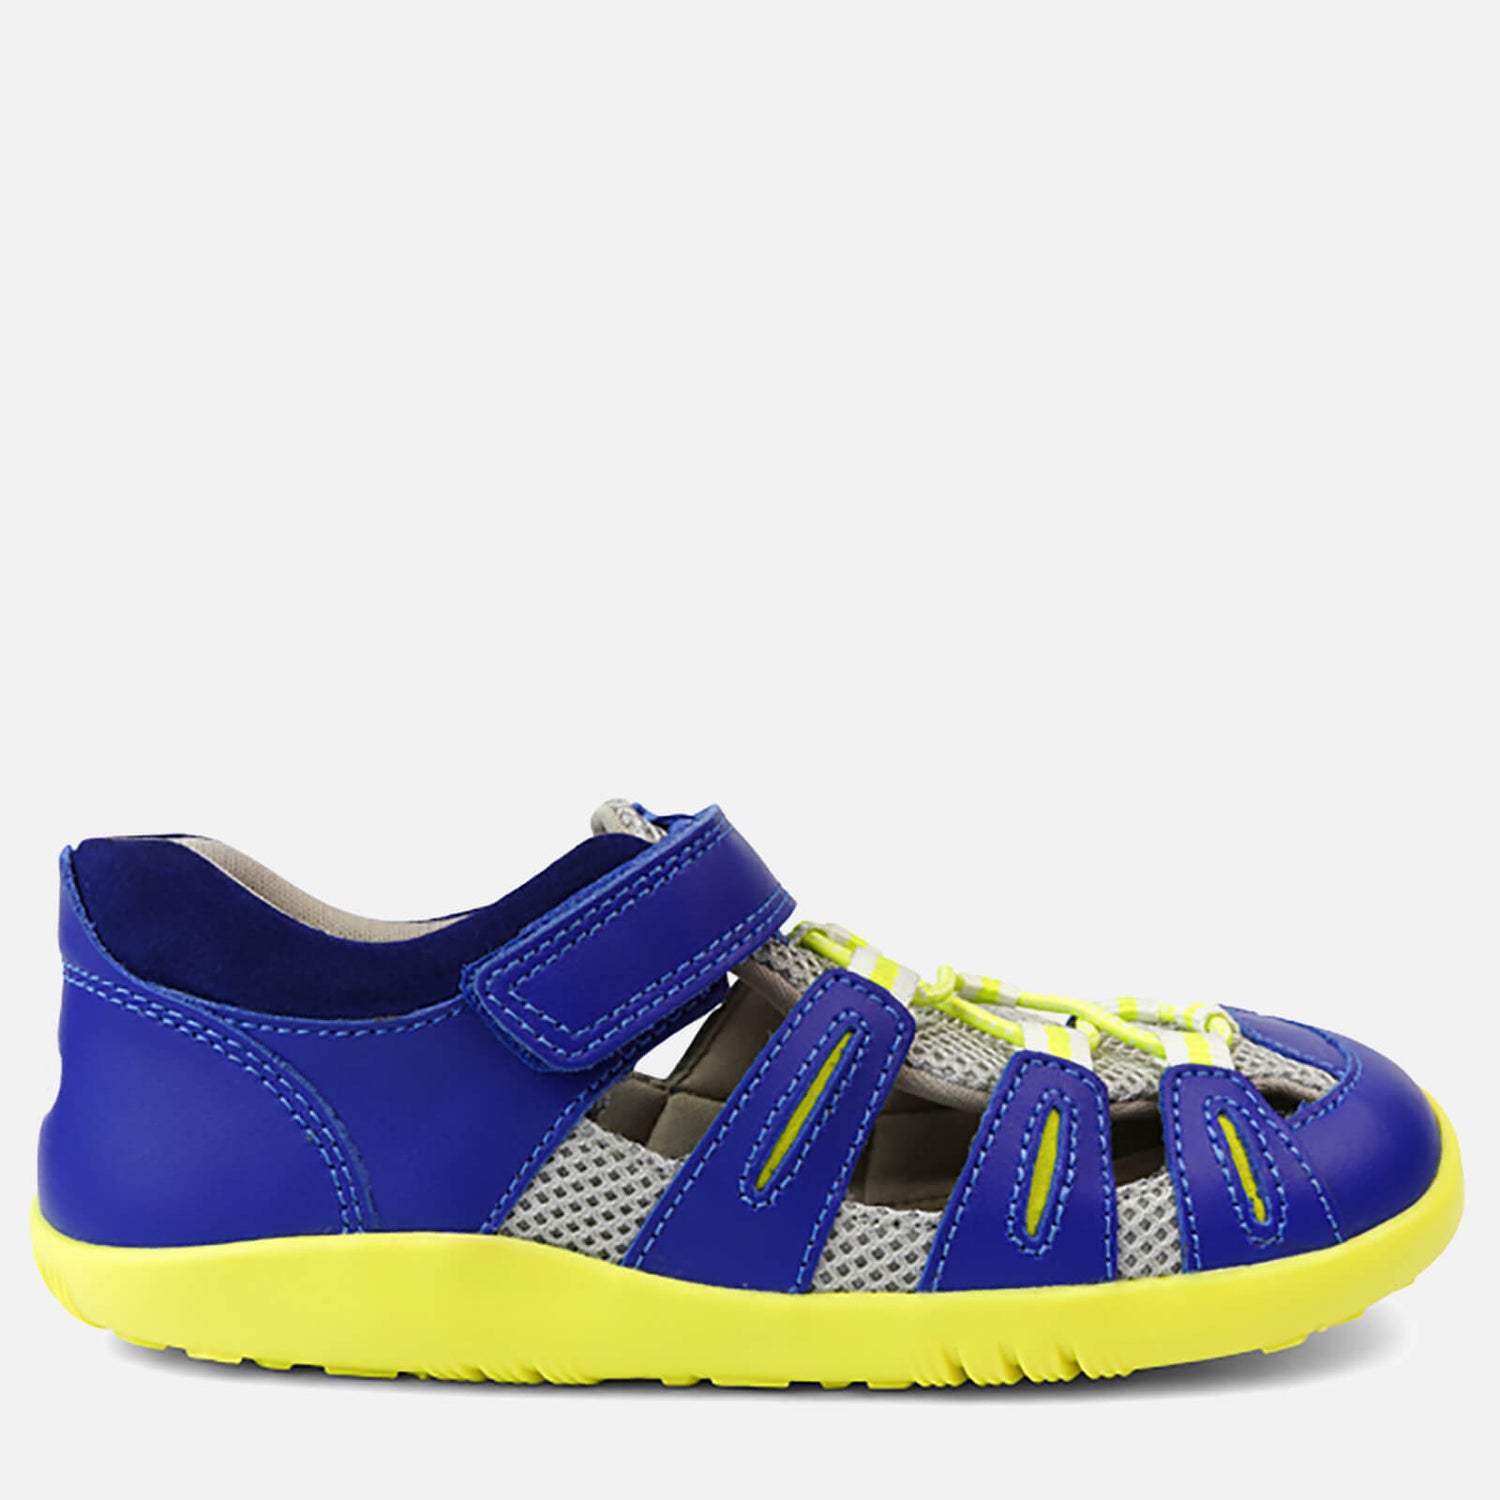 Bobux Boys' Kid's Plus Summit Water Shoes - Blueberry Neon